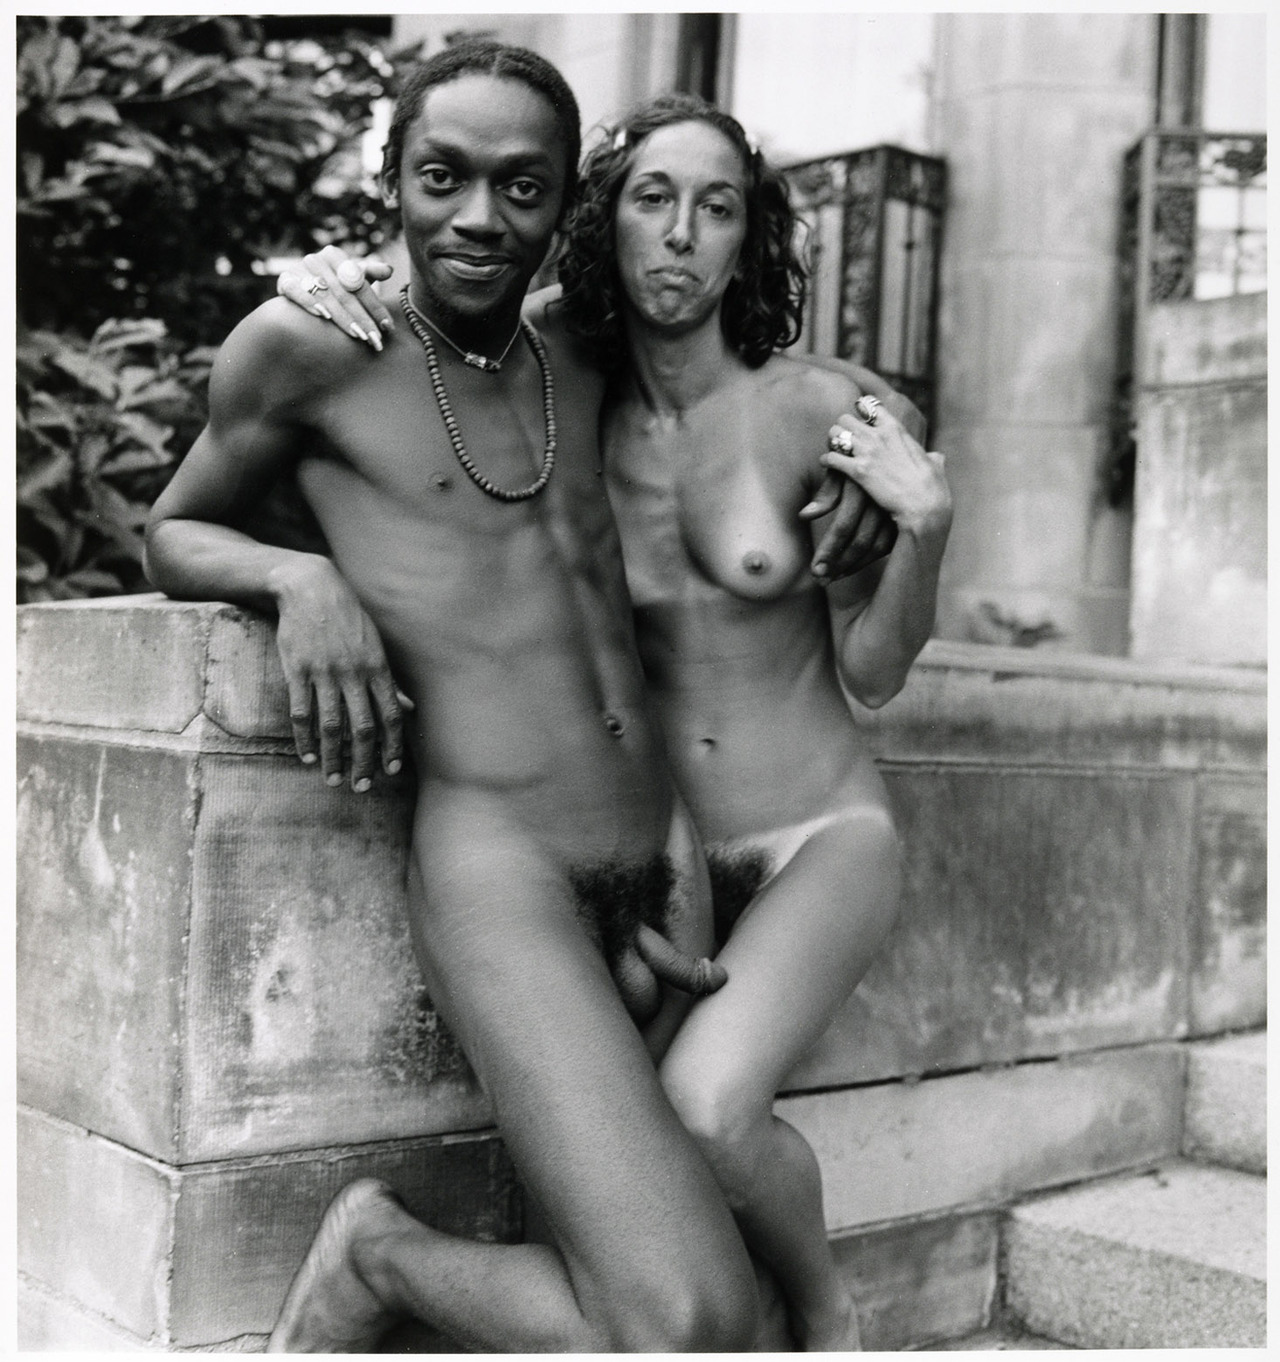 https://www.nudismlife.com/galleries/nudists_and_nude/nudists_couple/nudists_nude_naturists_couple_2496.jpg